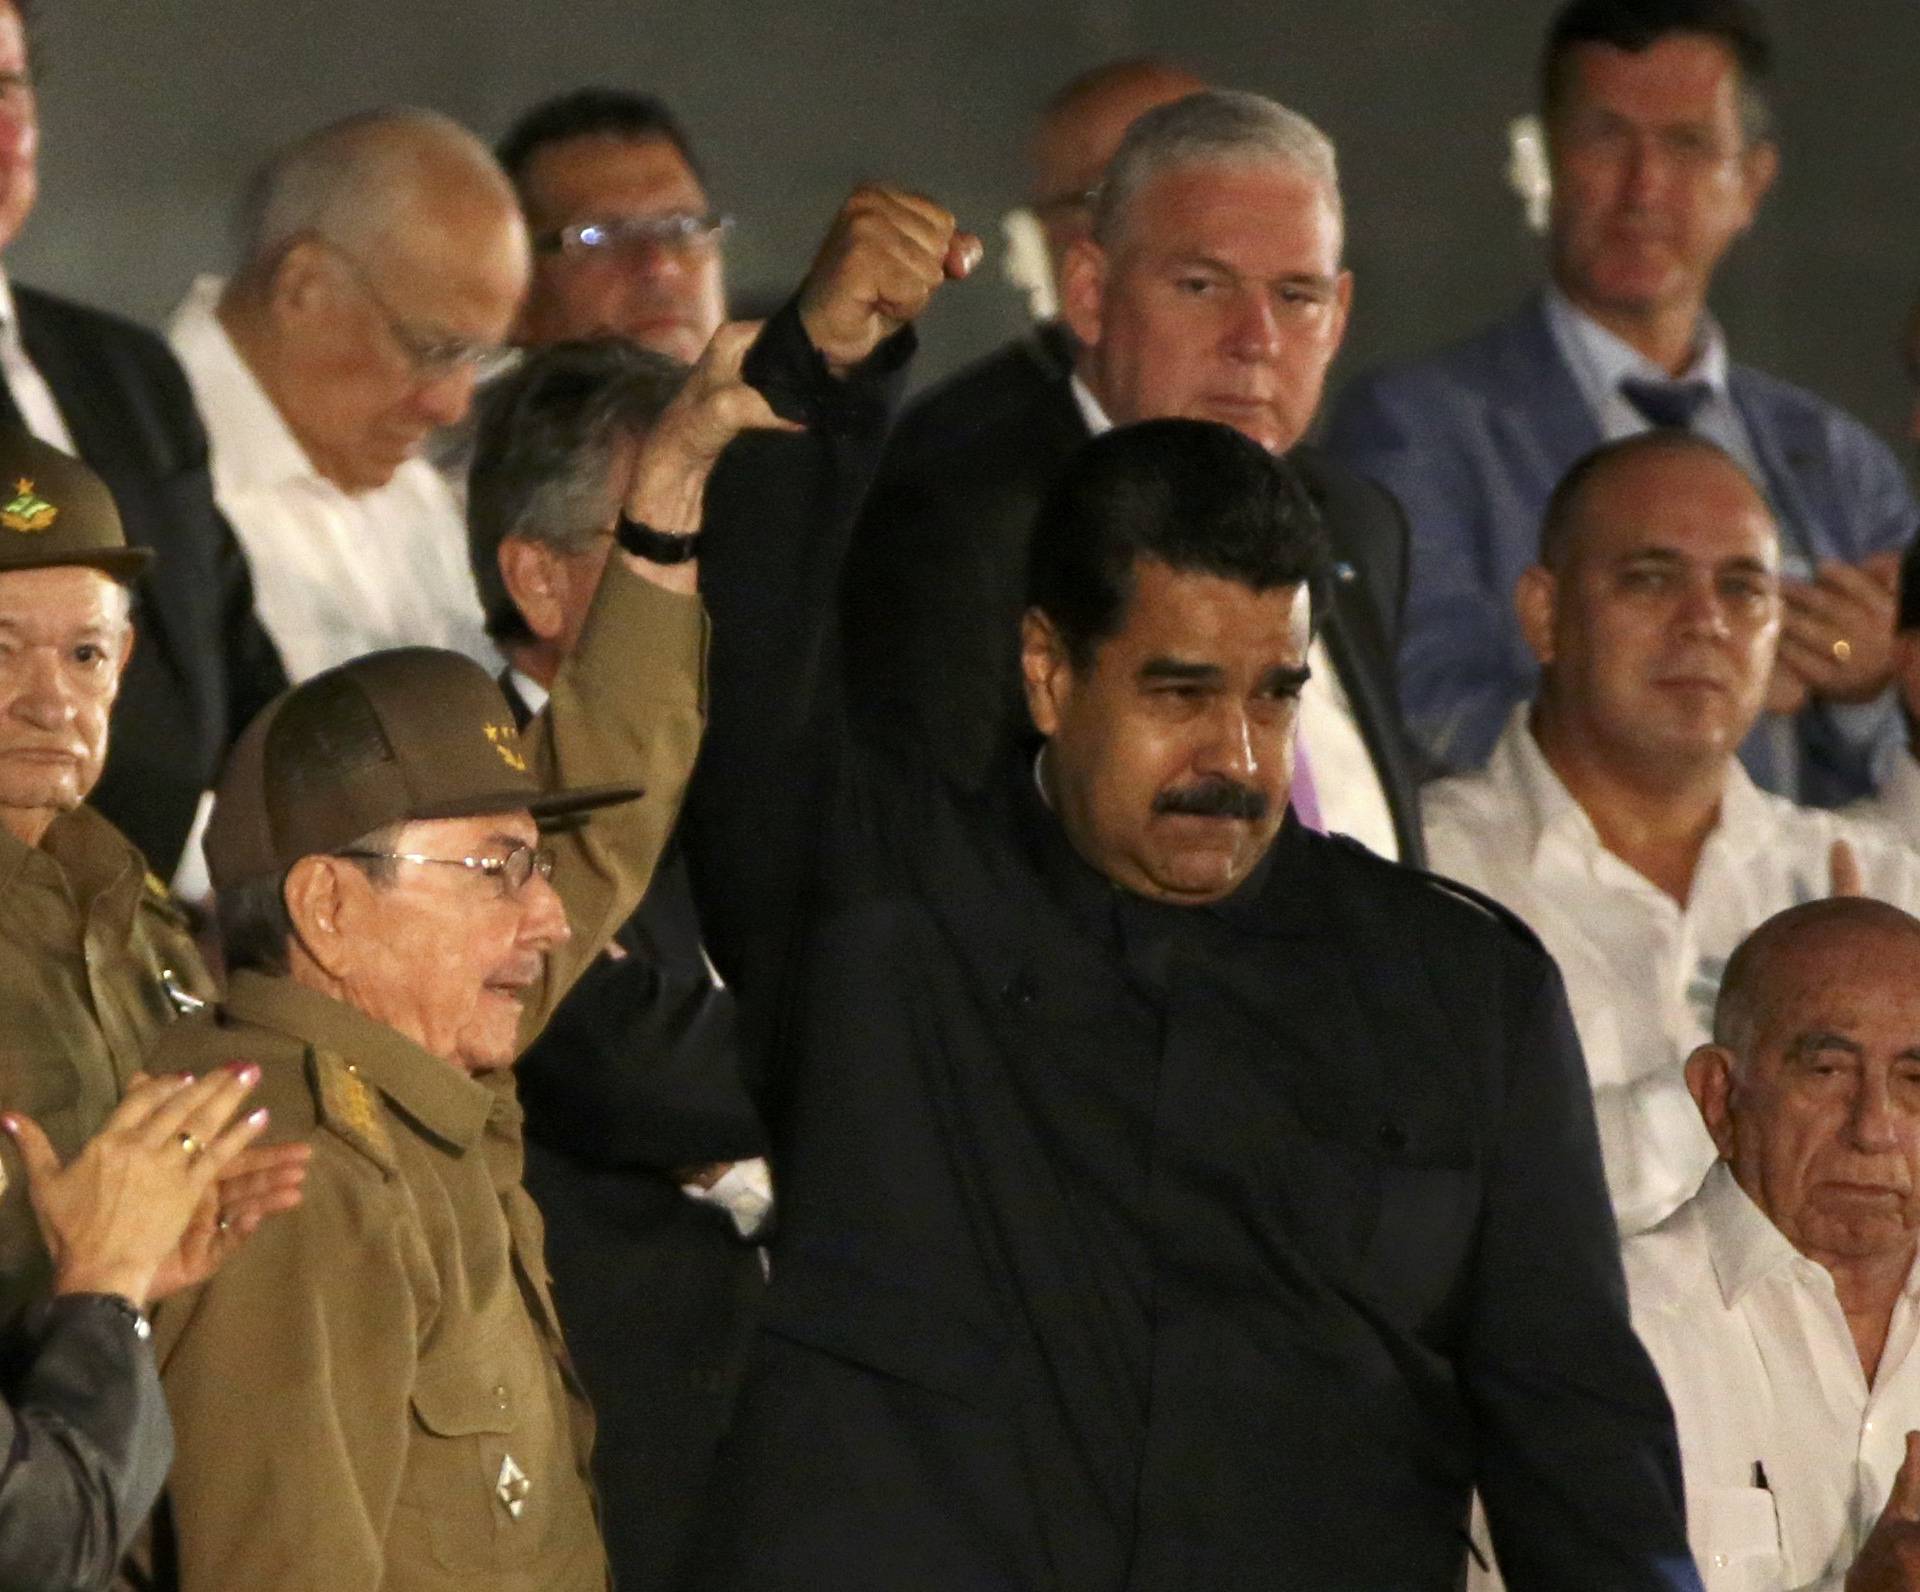 Venezuelan President Nicolas Maduro addresses the crowd at a massive tribute to Cuba's late President Castro in Havana